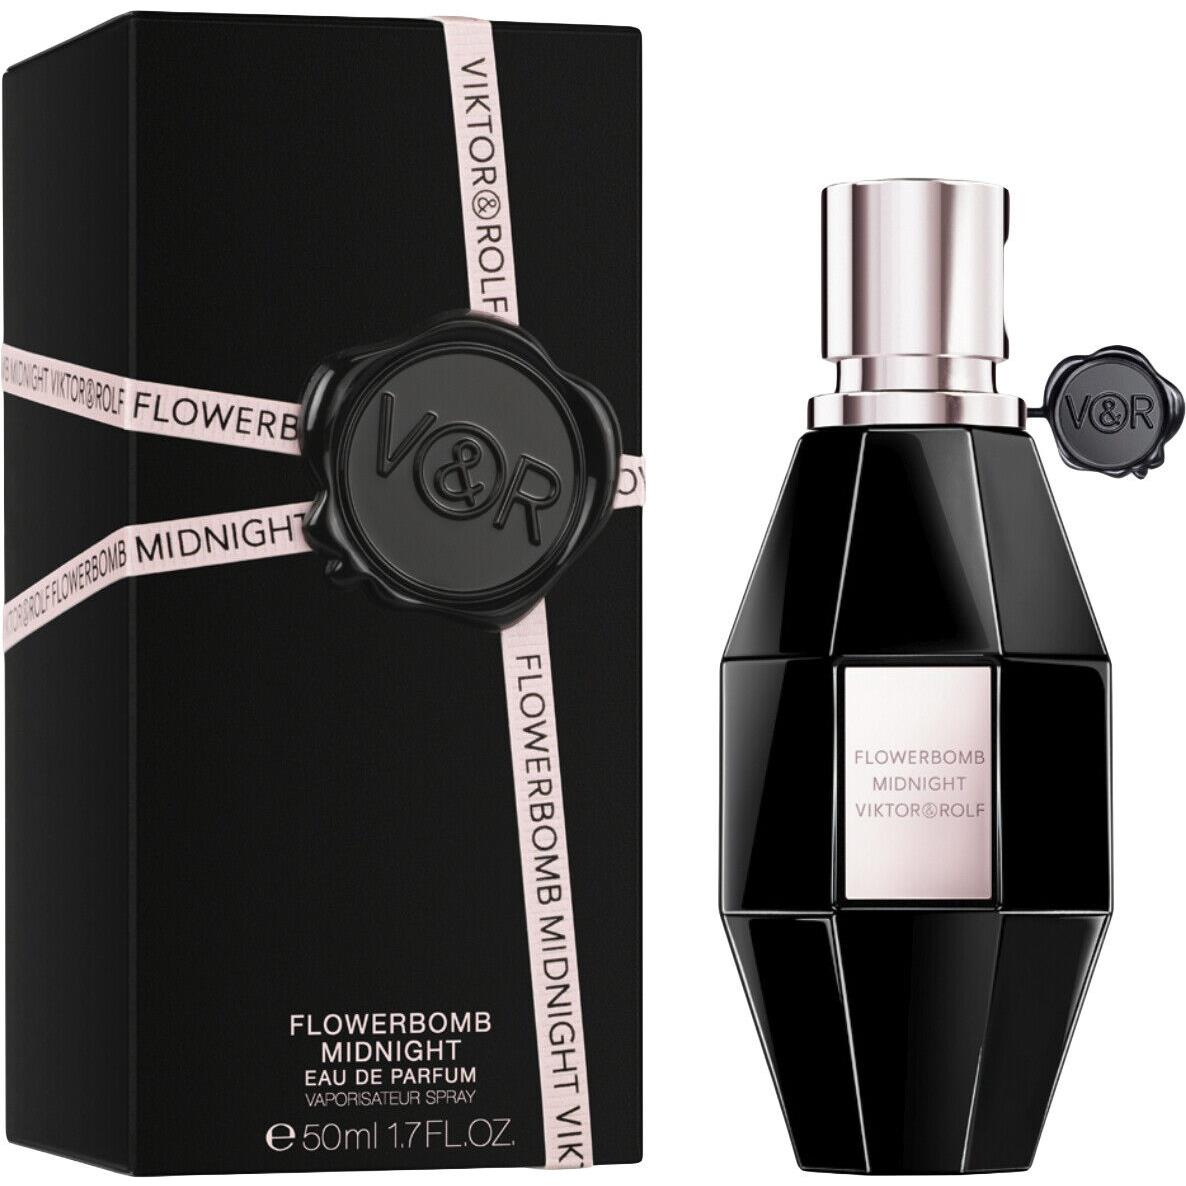 Flowerbomb Midnight by Viktor Rolf 1.7 Oz. 50ml Eau de Parfum For Women